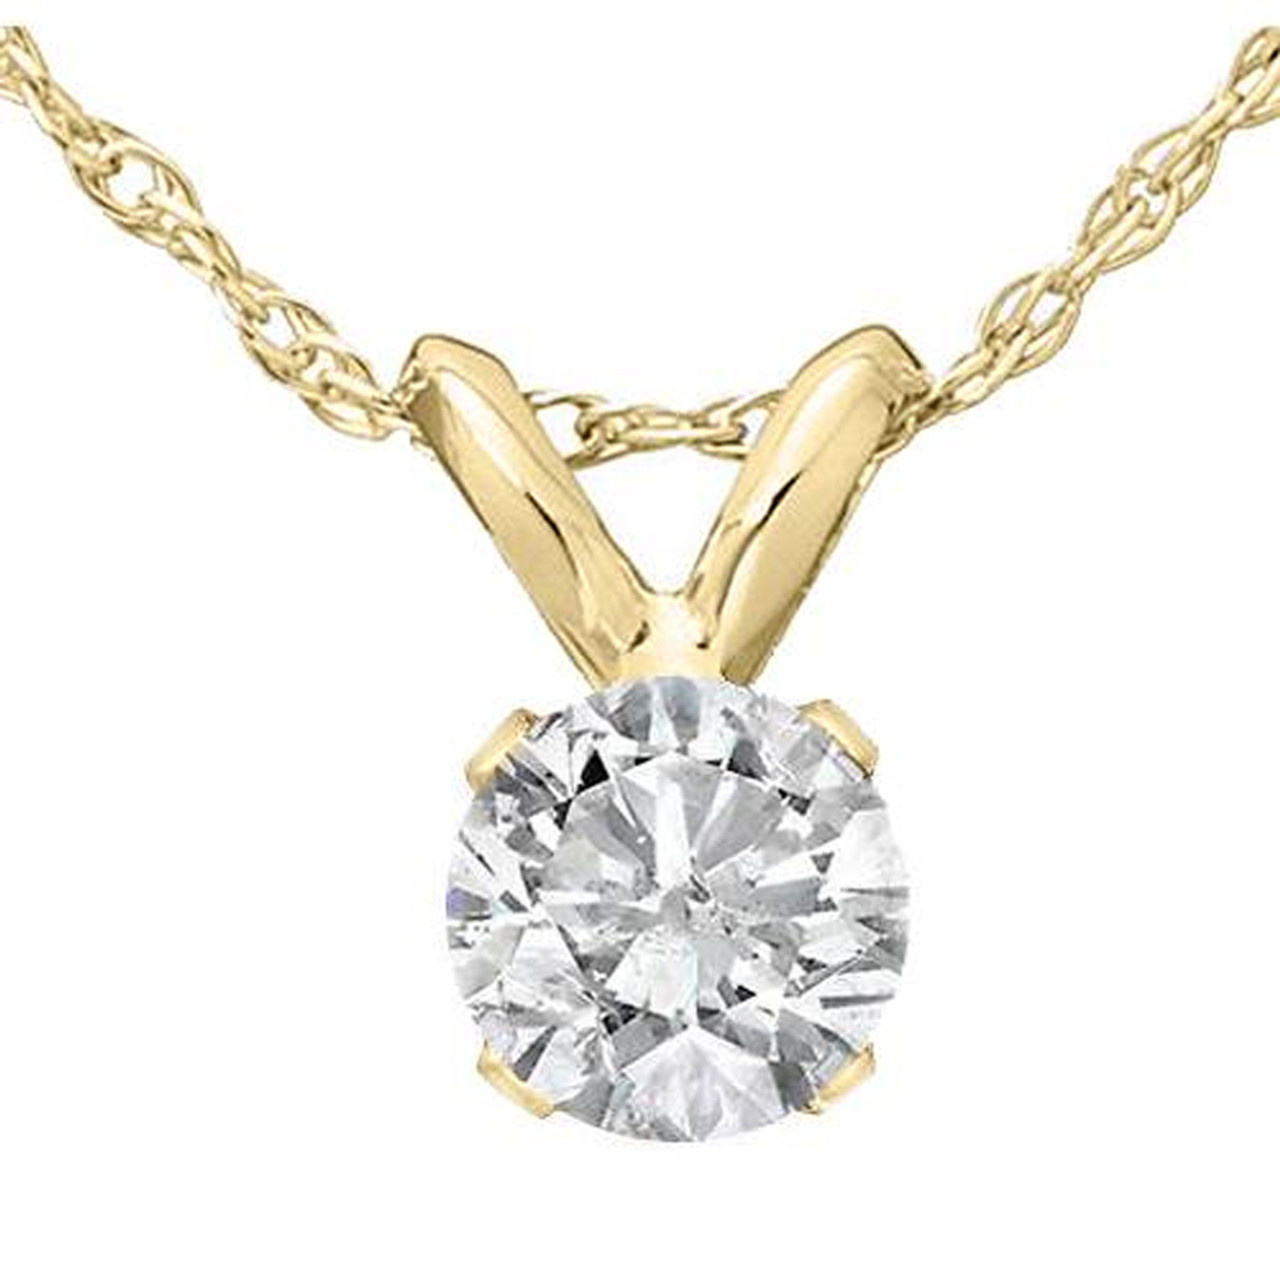 Diamond Heart Necklace 1 ct tw 10K White Gold 18